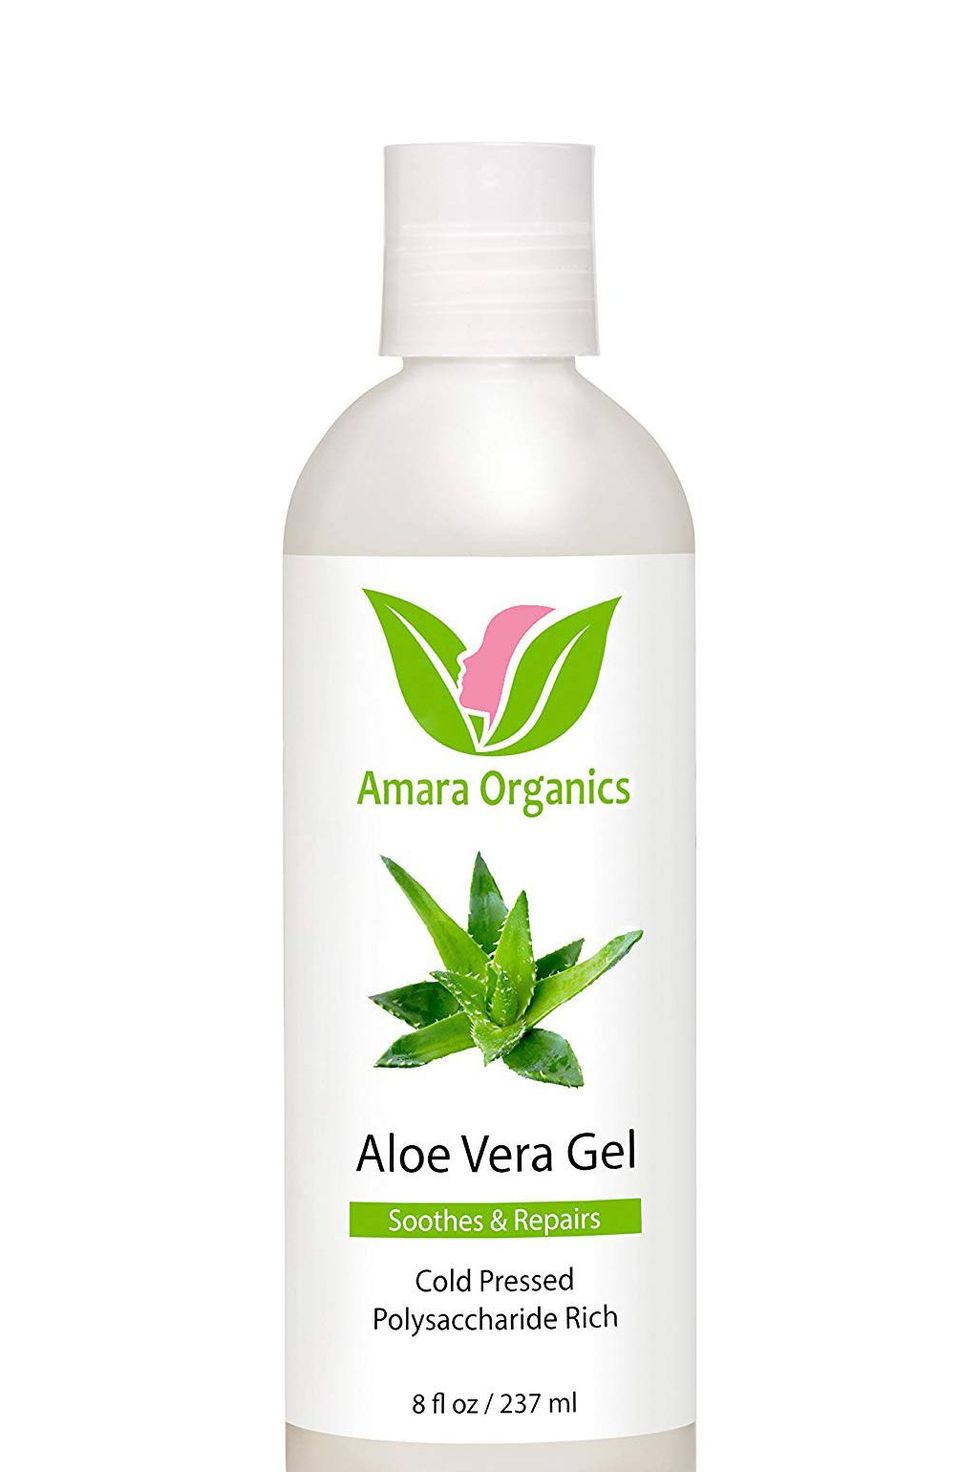 Aloe Vera Uses - 12 Things You Can Do With Aloe Vera Gel